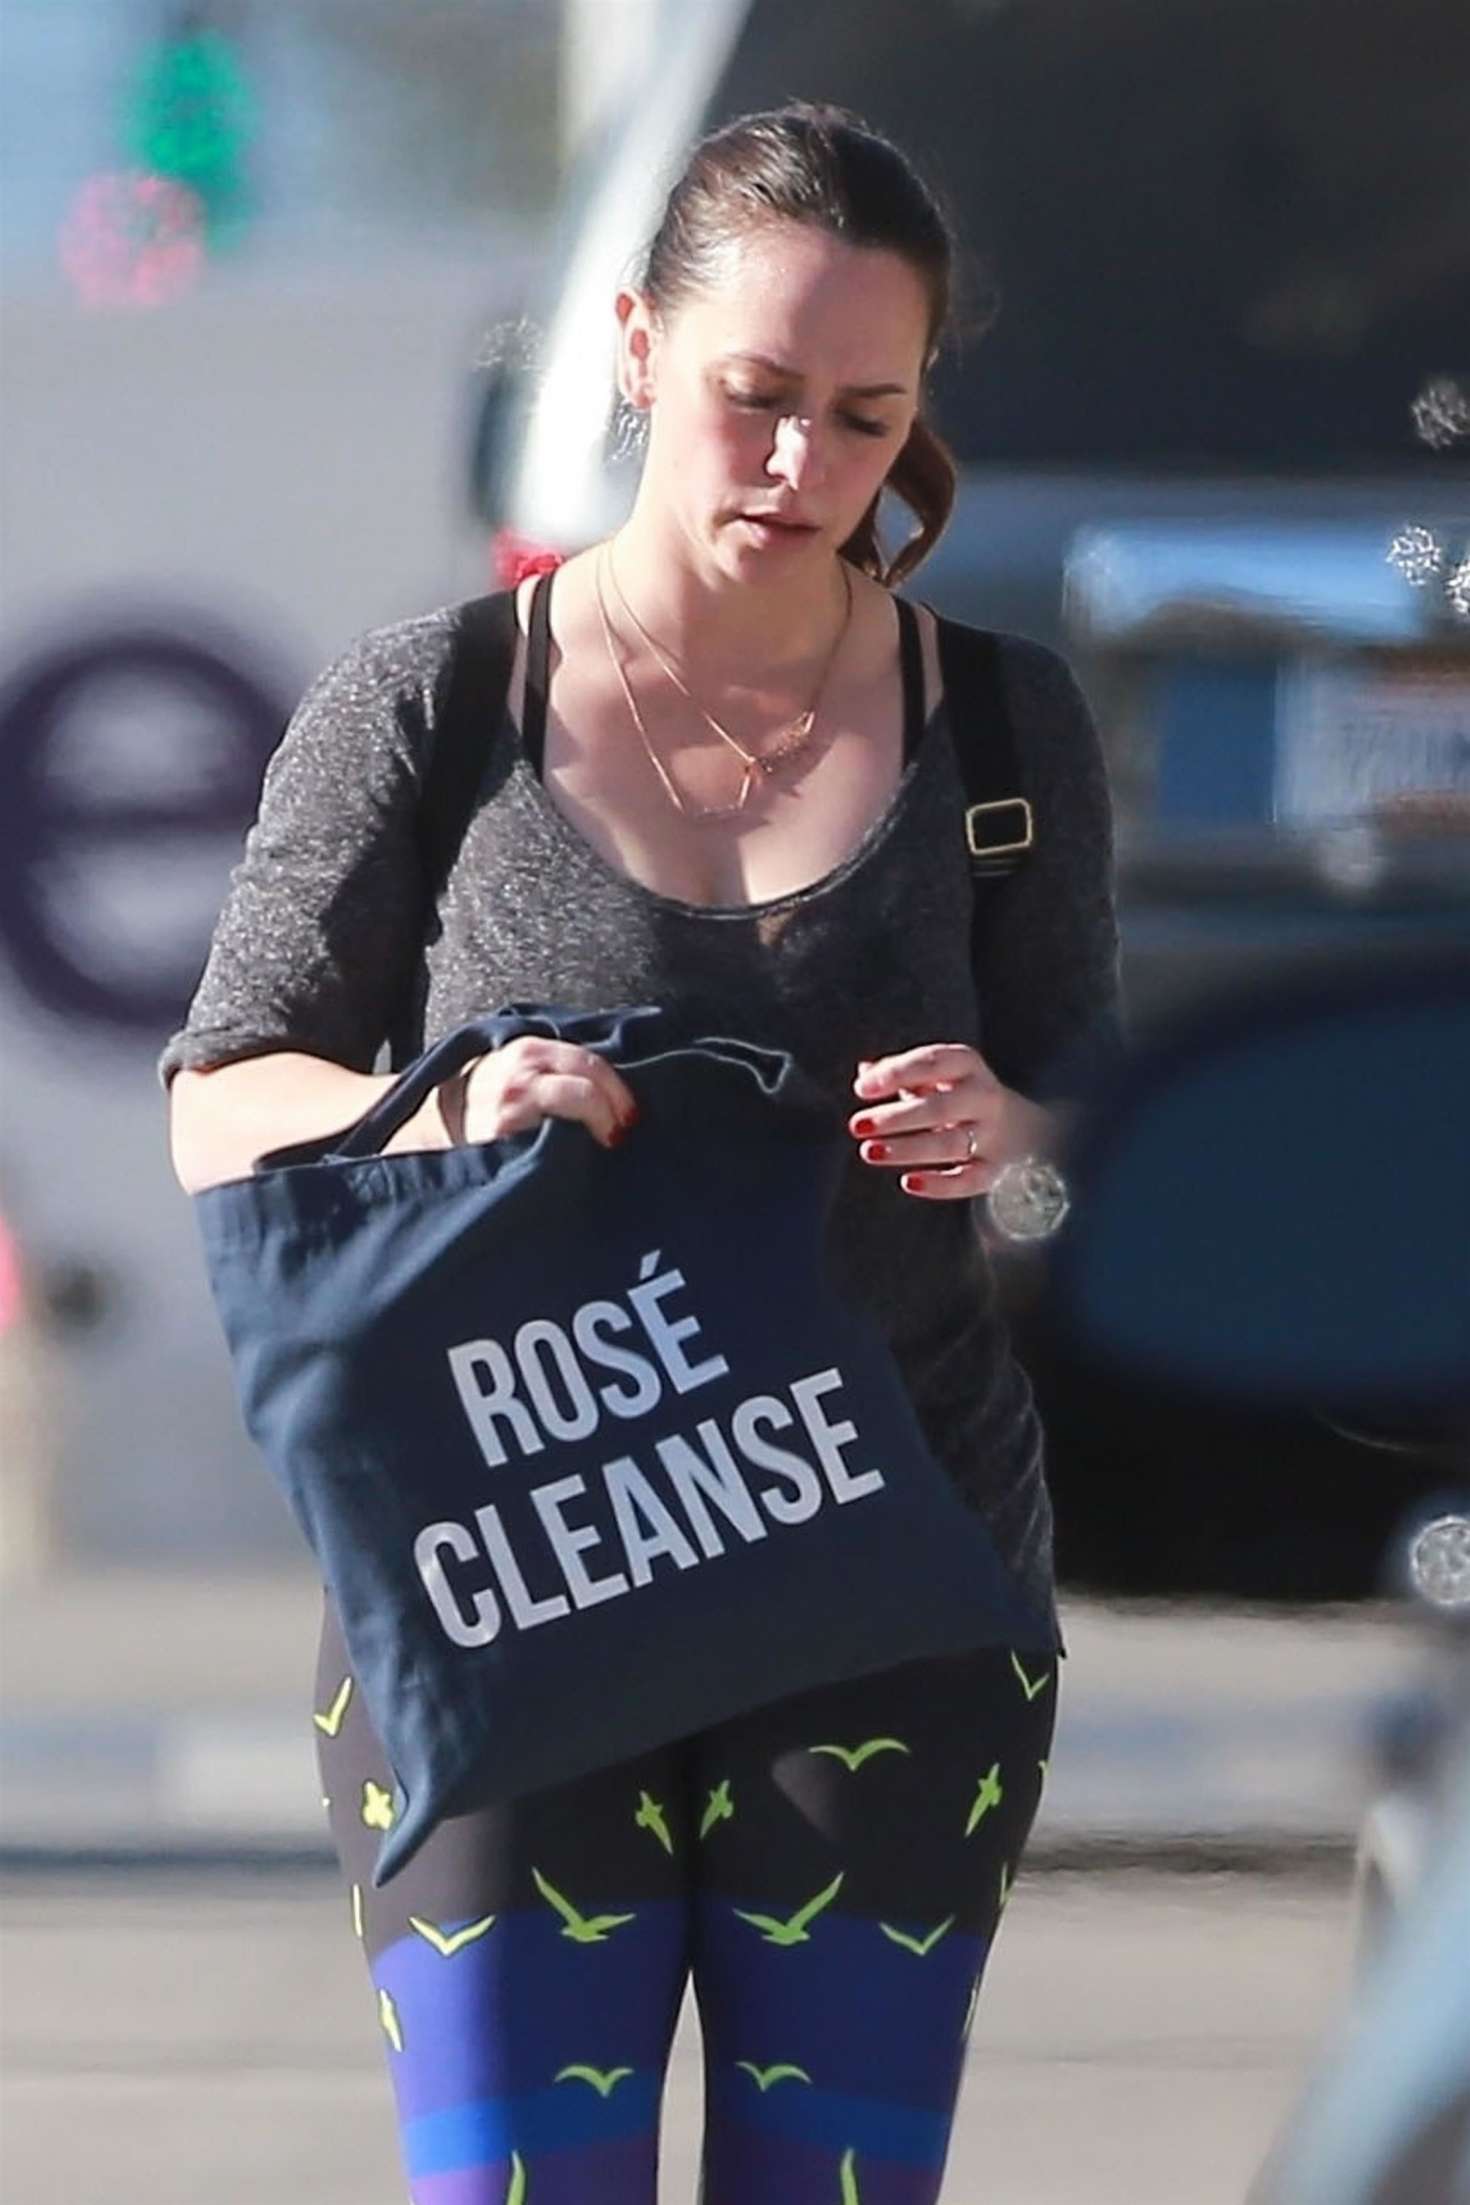 Jennifer Love Hewitt â€“ Leaving the gym in Santa Monica